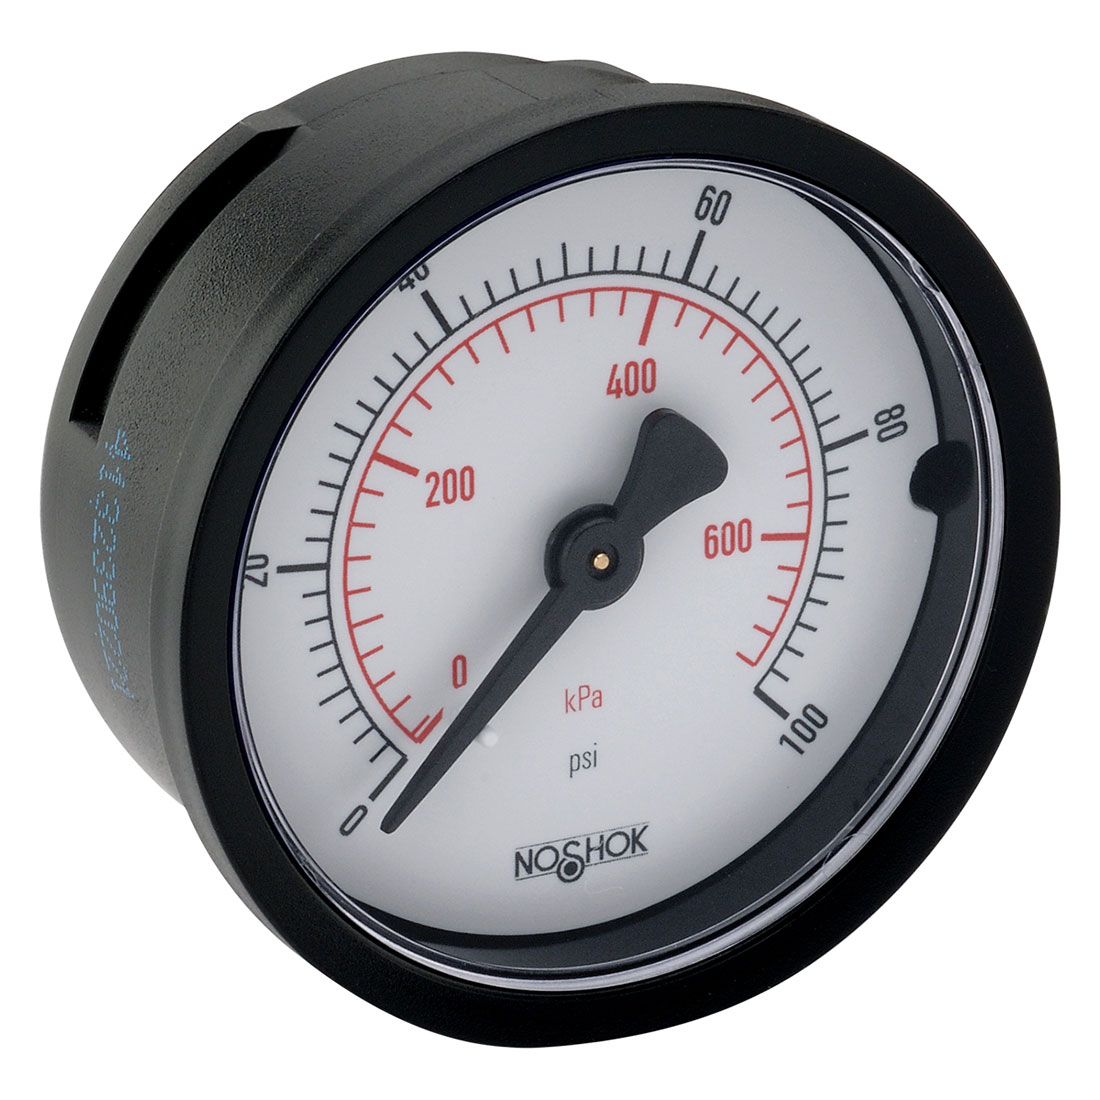 20-110-160-psi/kPa-BLFF 100 Series ABS and Steel Case Dry Pressure Gauges